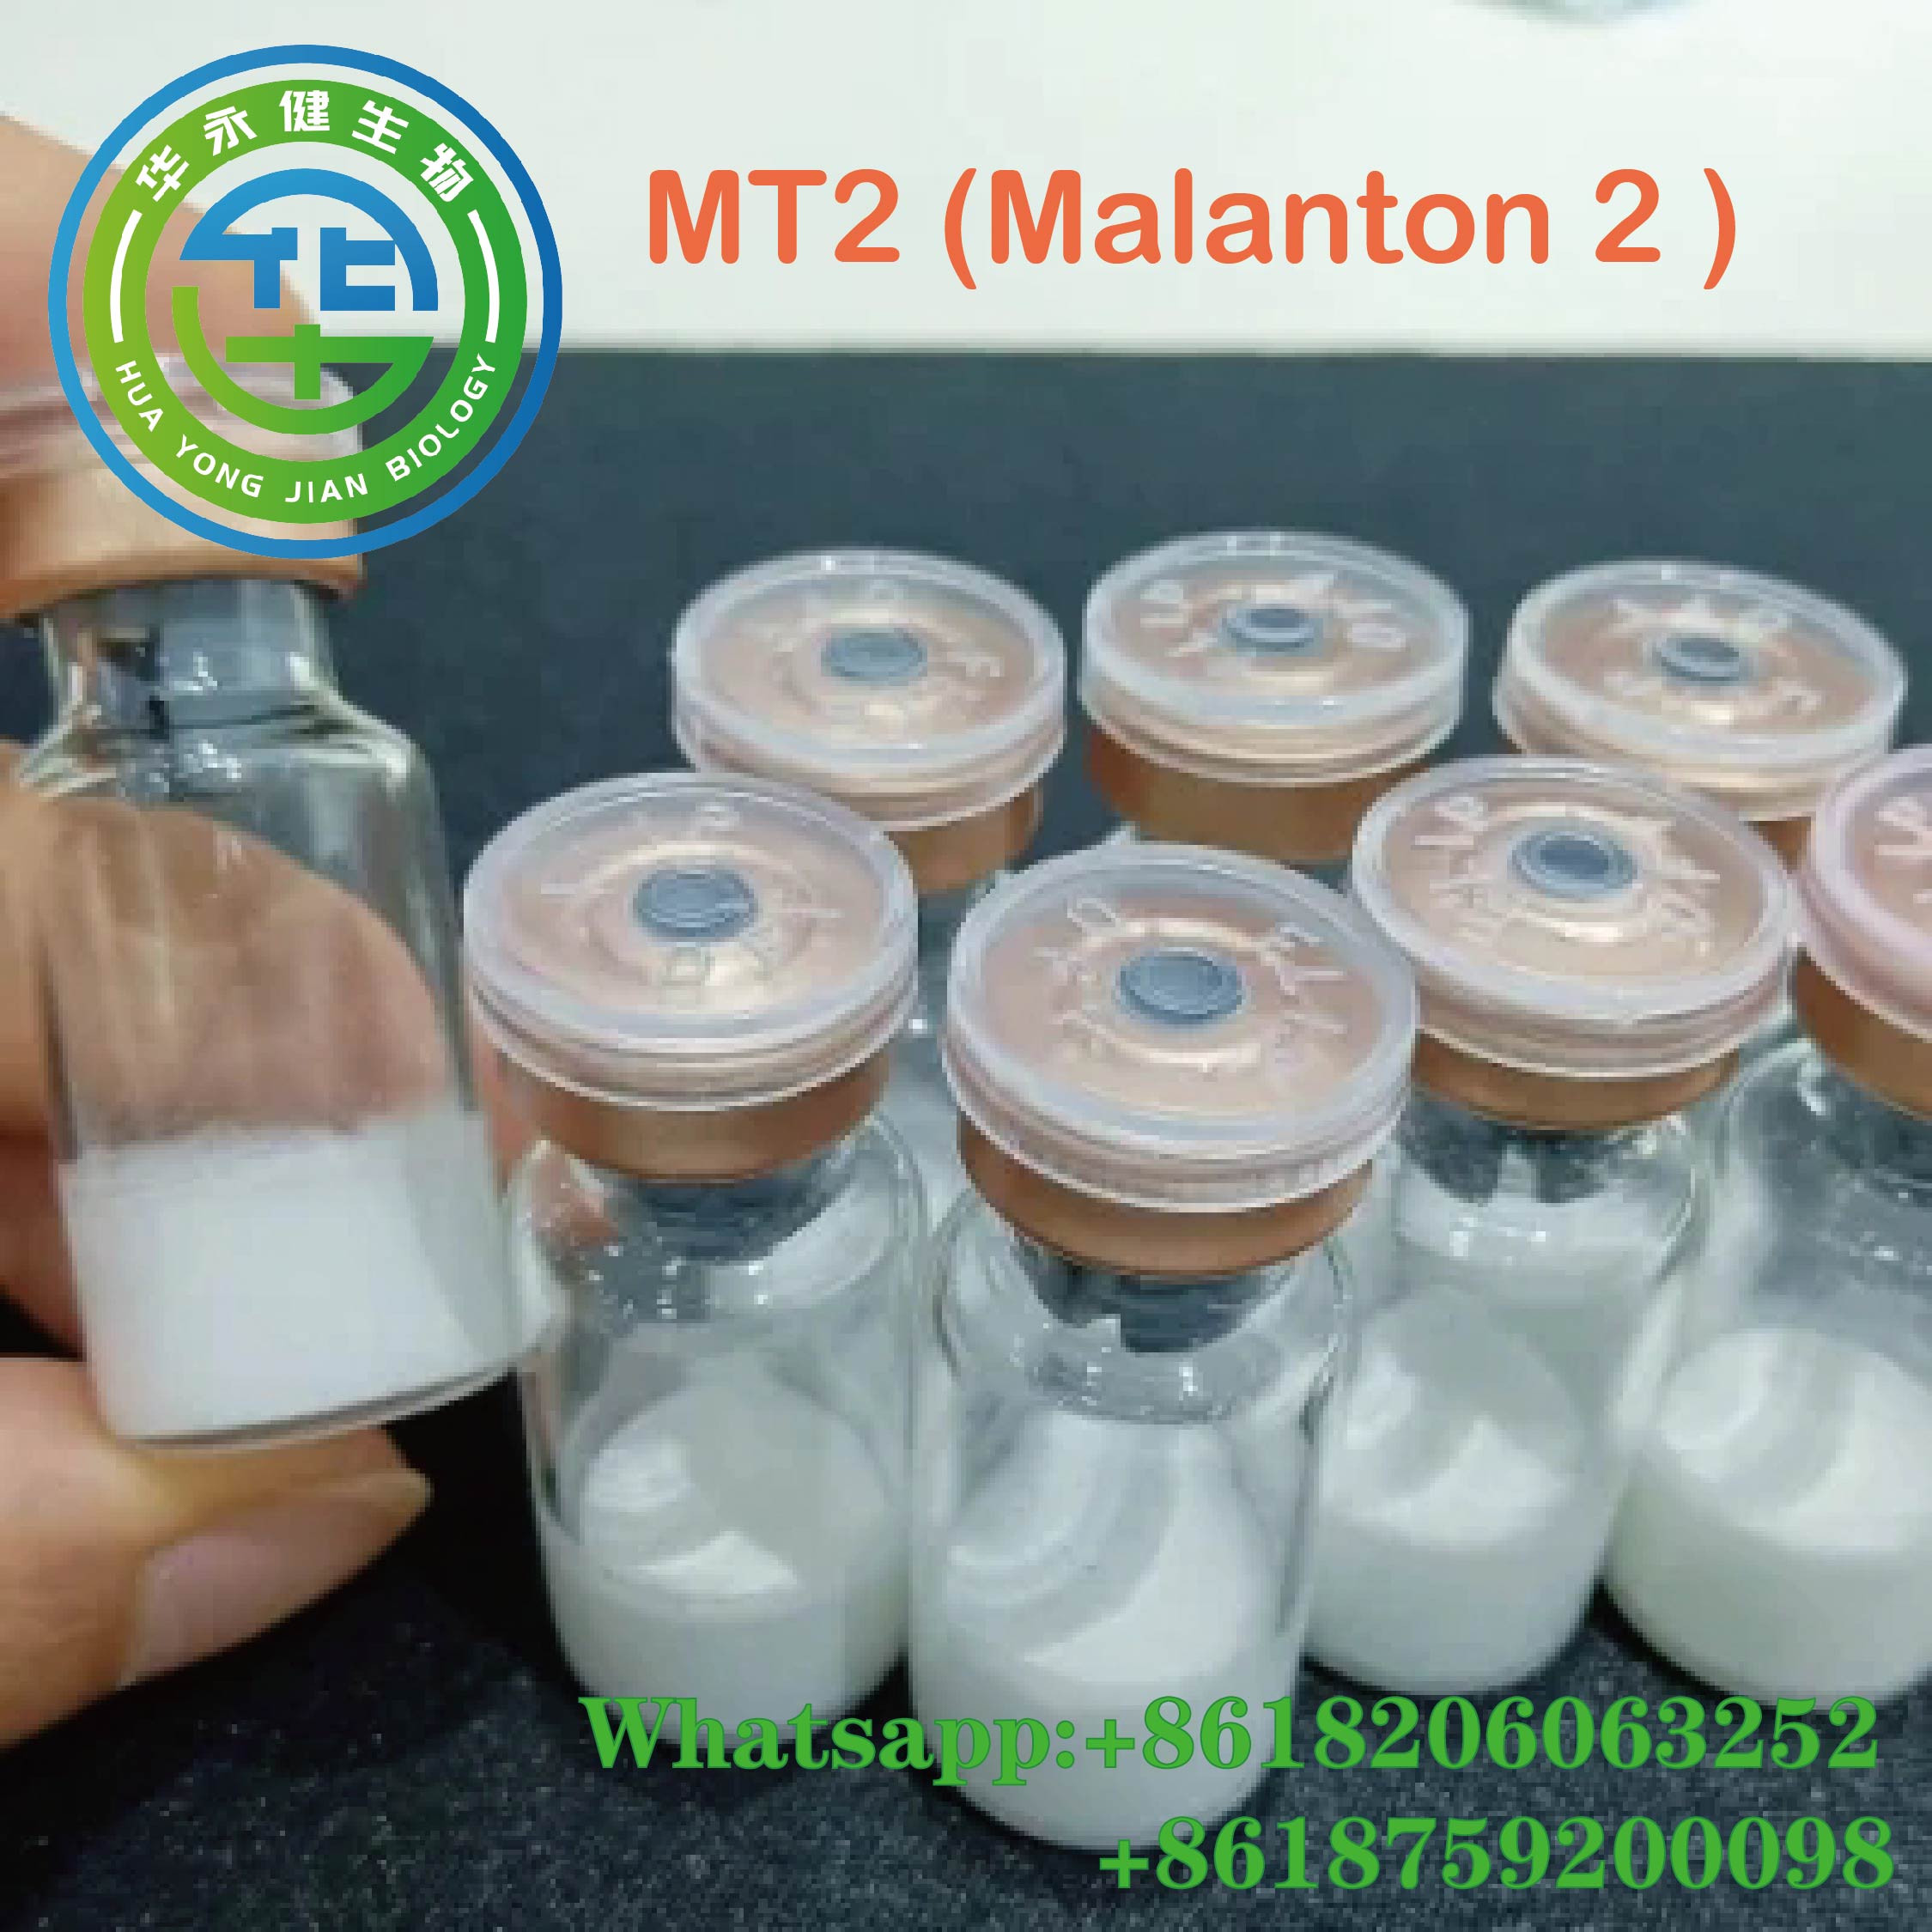  Muscle Building Malanton 2 Peptides White Powder MT2 CAS 121062-08-6